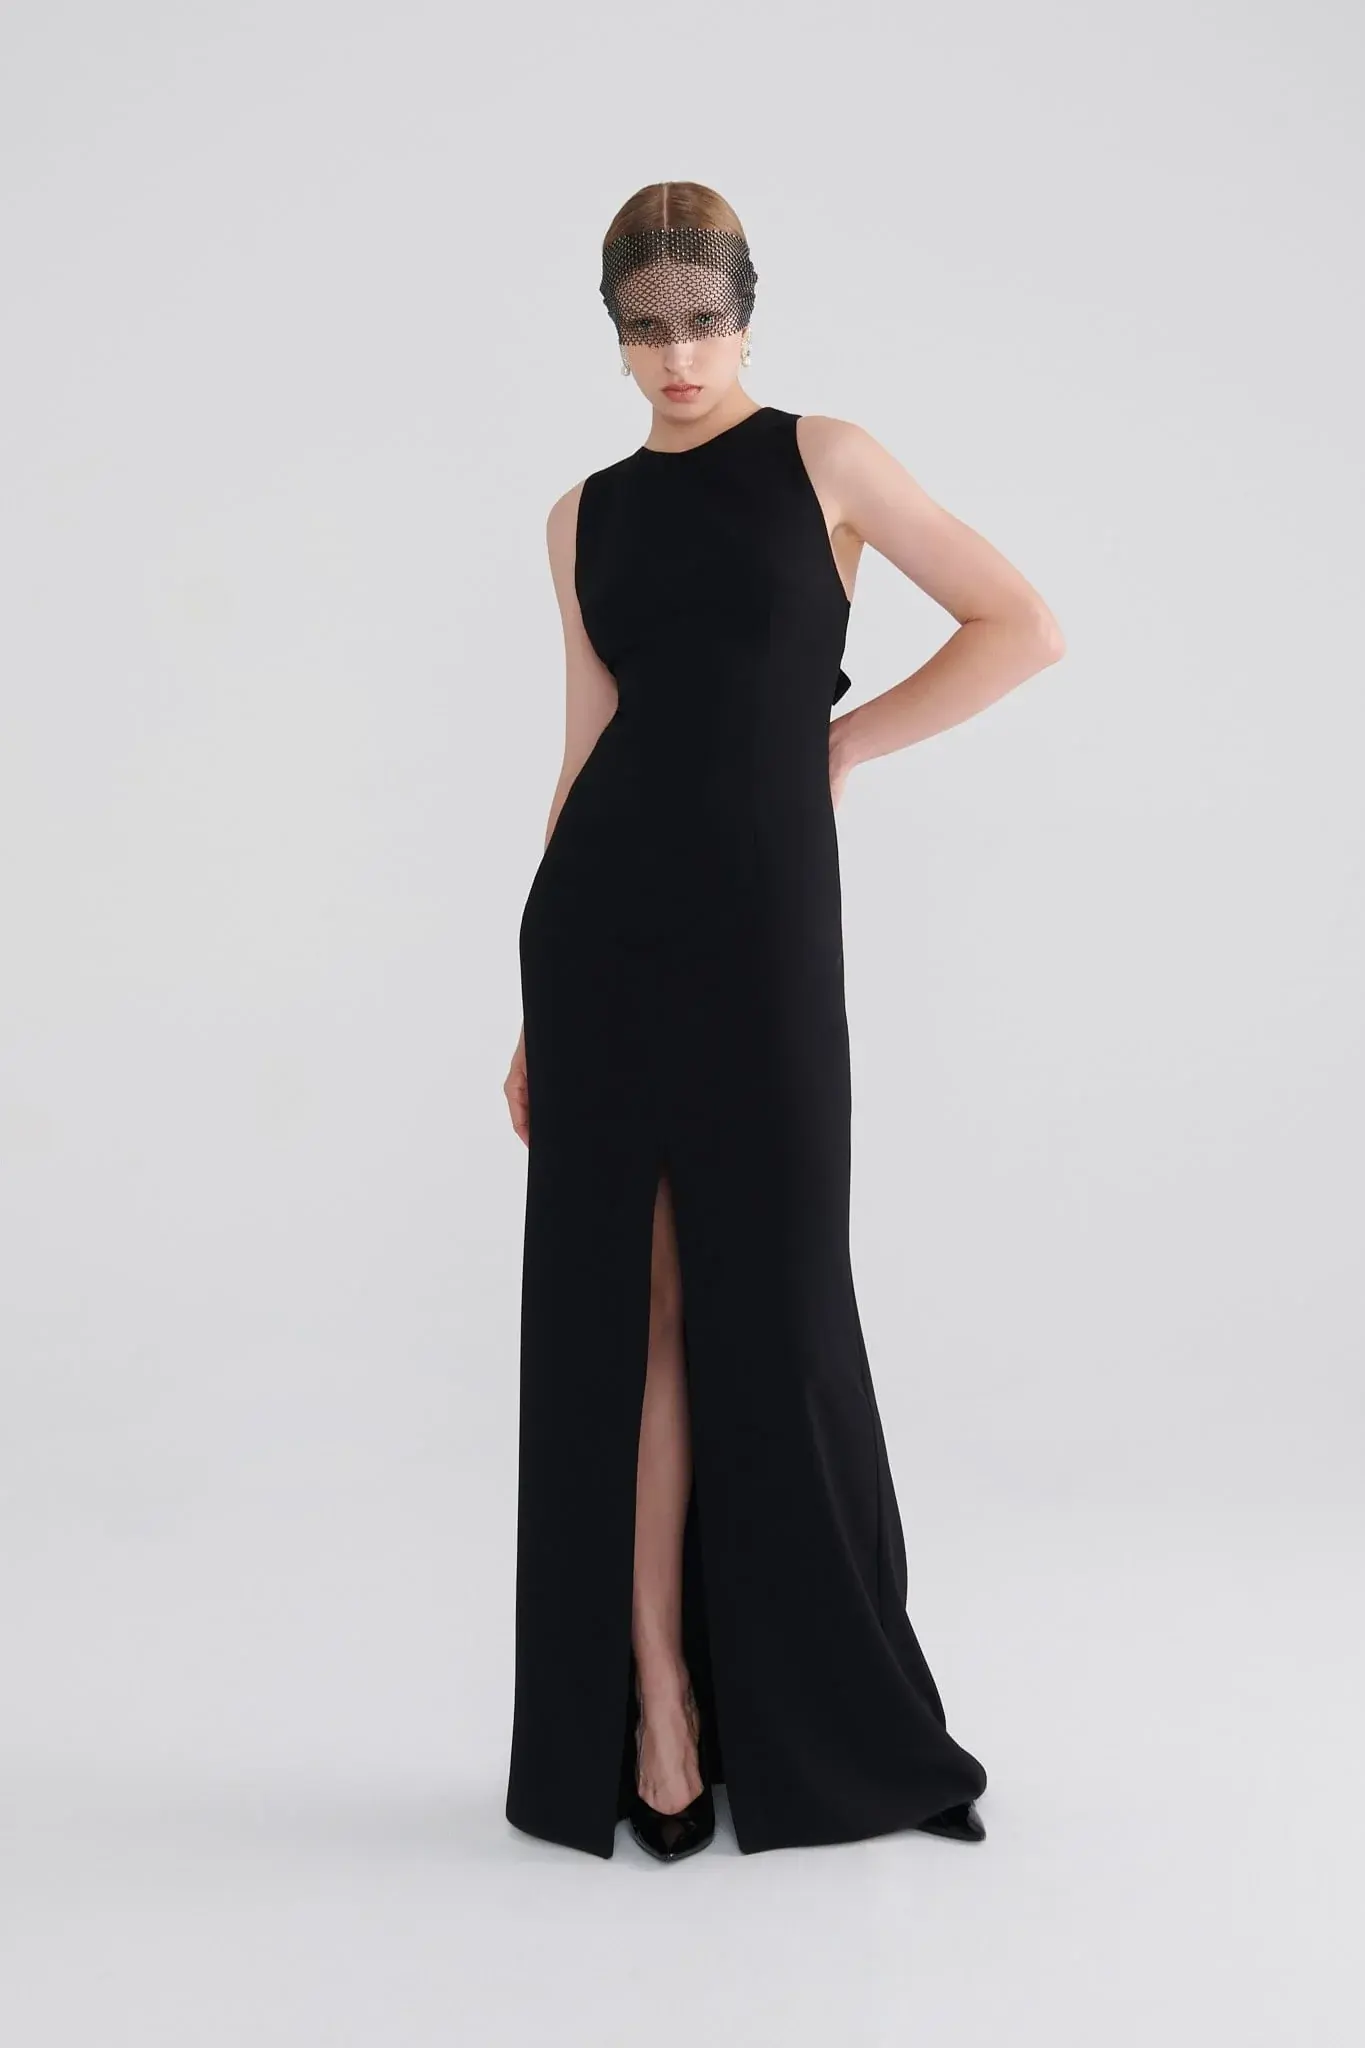 Roman Elegant Backless Black Evening Gown - 2 / Black. 1